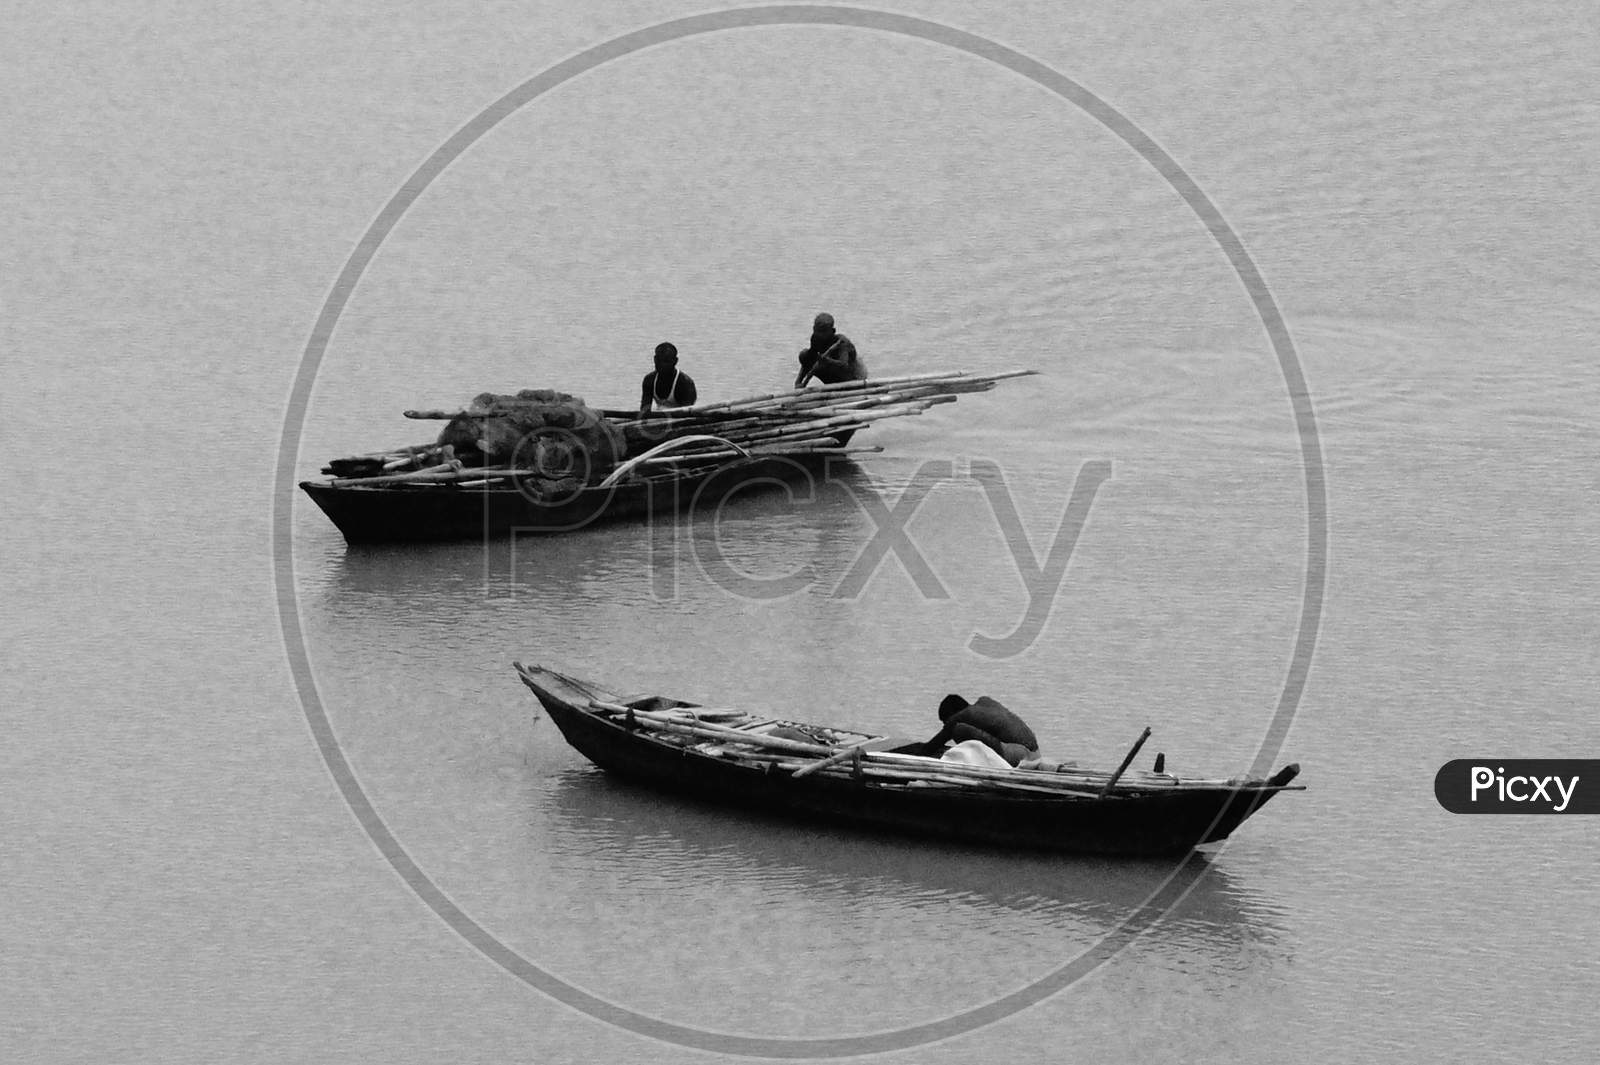 Two fishermen boat in Ganga River